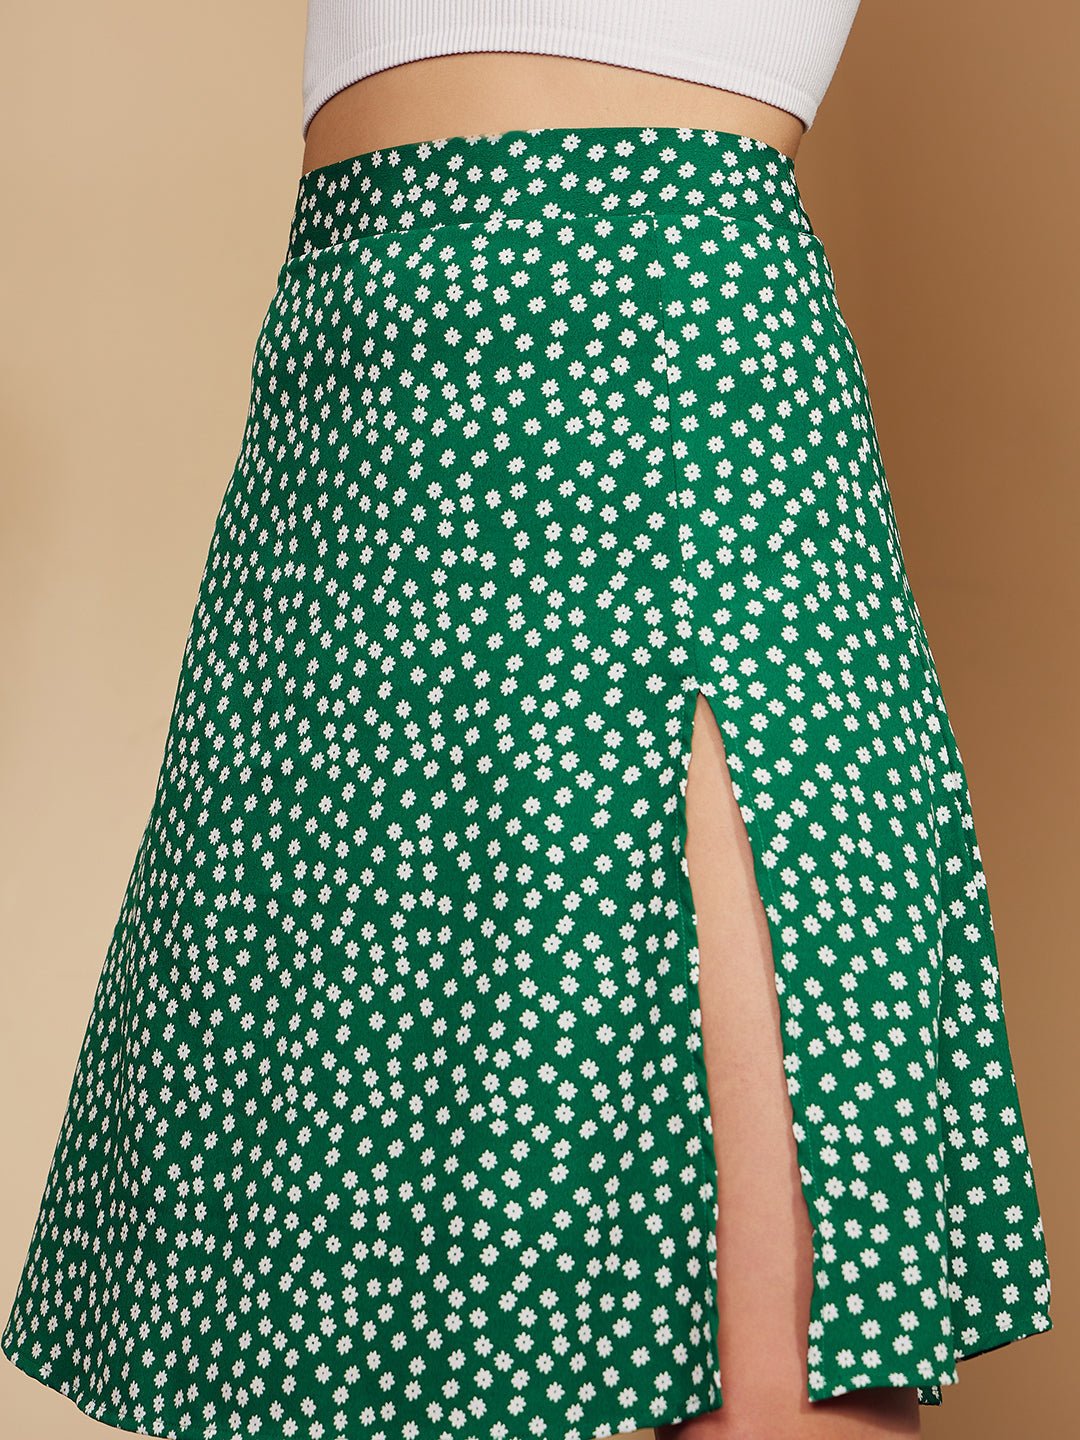 Folk Republic Women Green & White Floral Printed Thigh-High Slit Flared A-Line Midi Skirt - #folk republic#